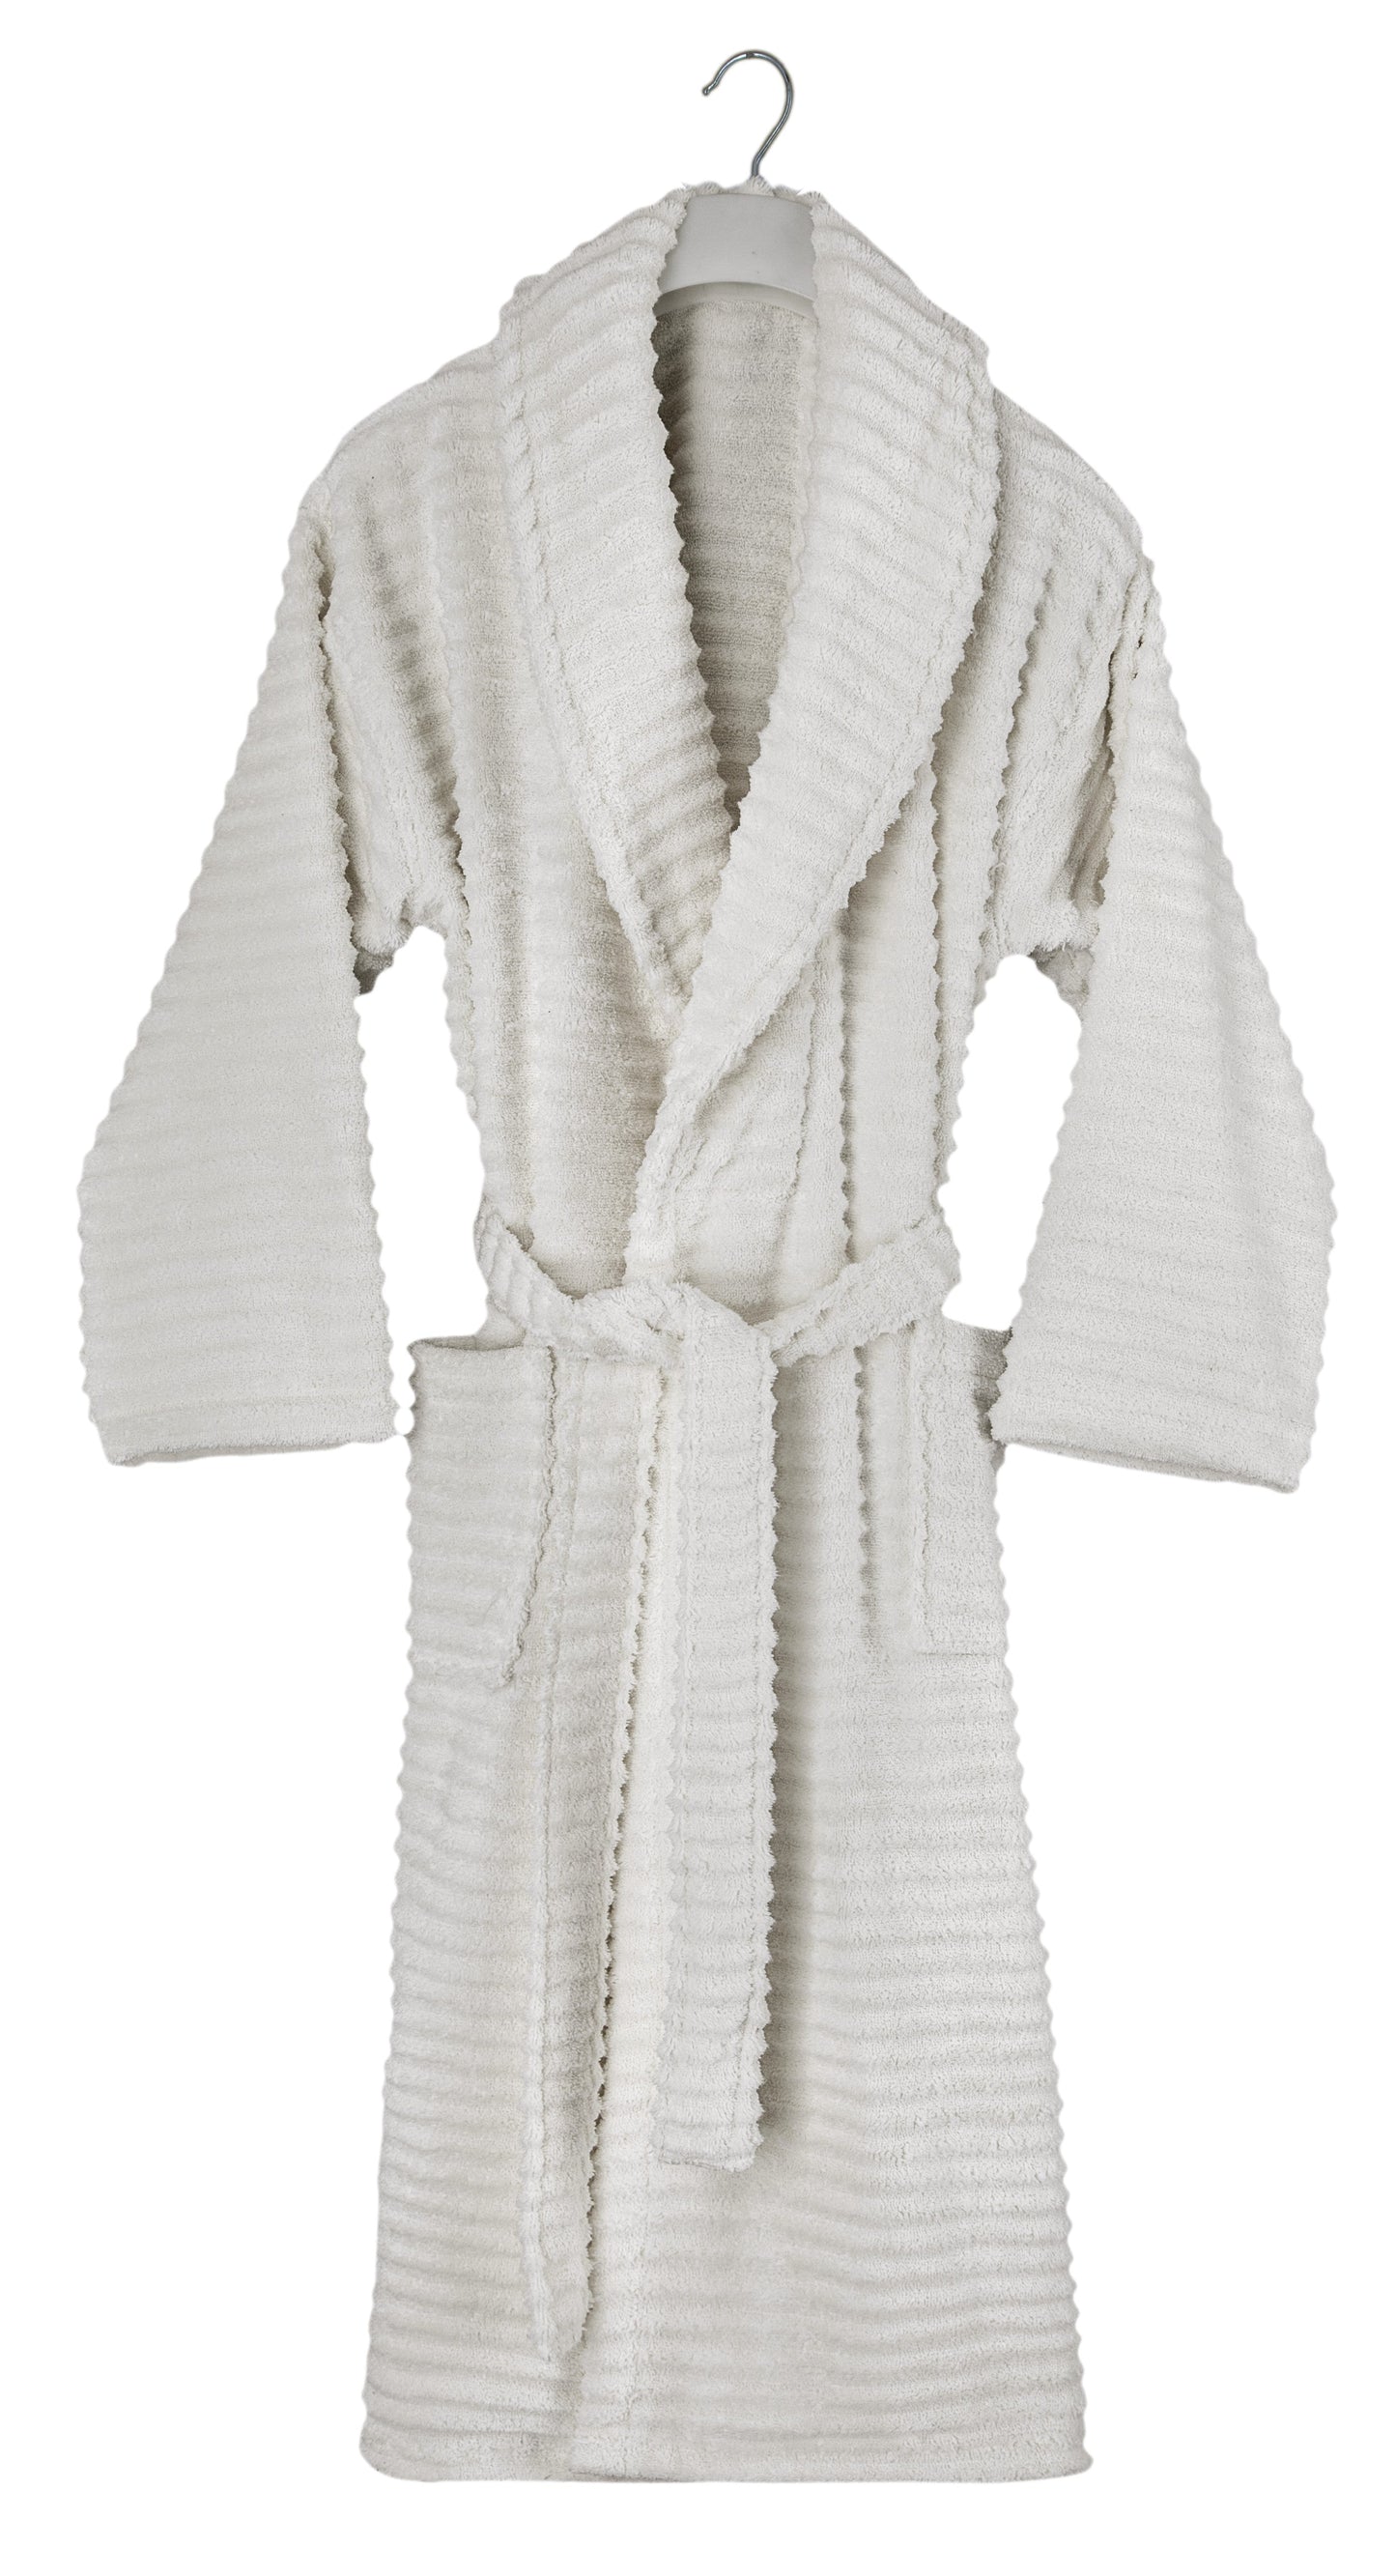 100% Turkish Cotton Ribbed Bath Robe